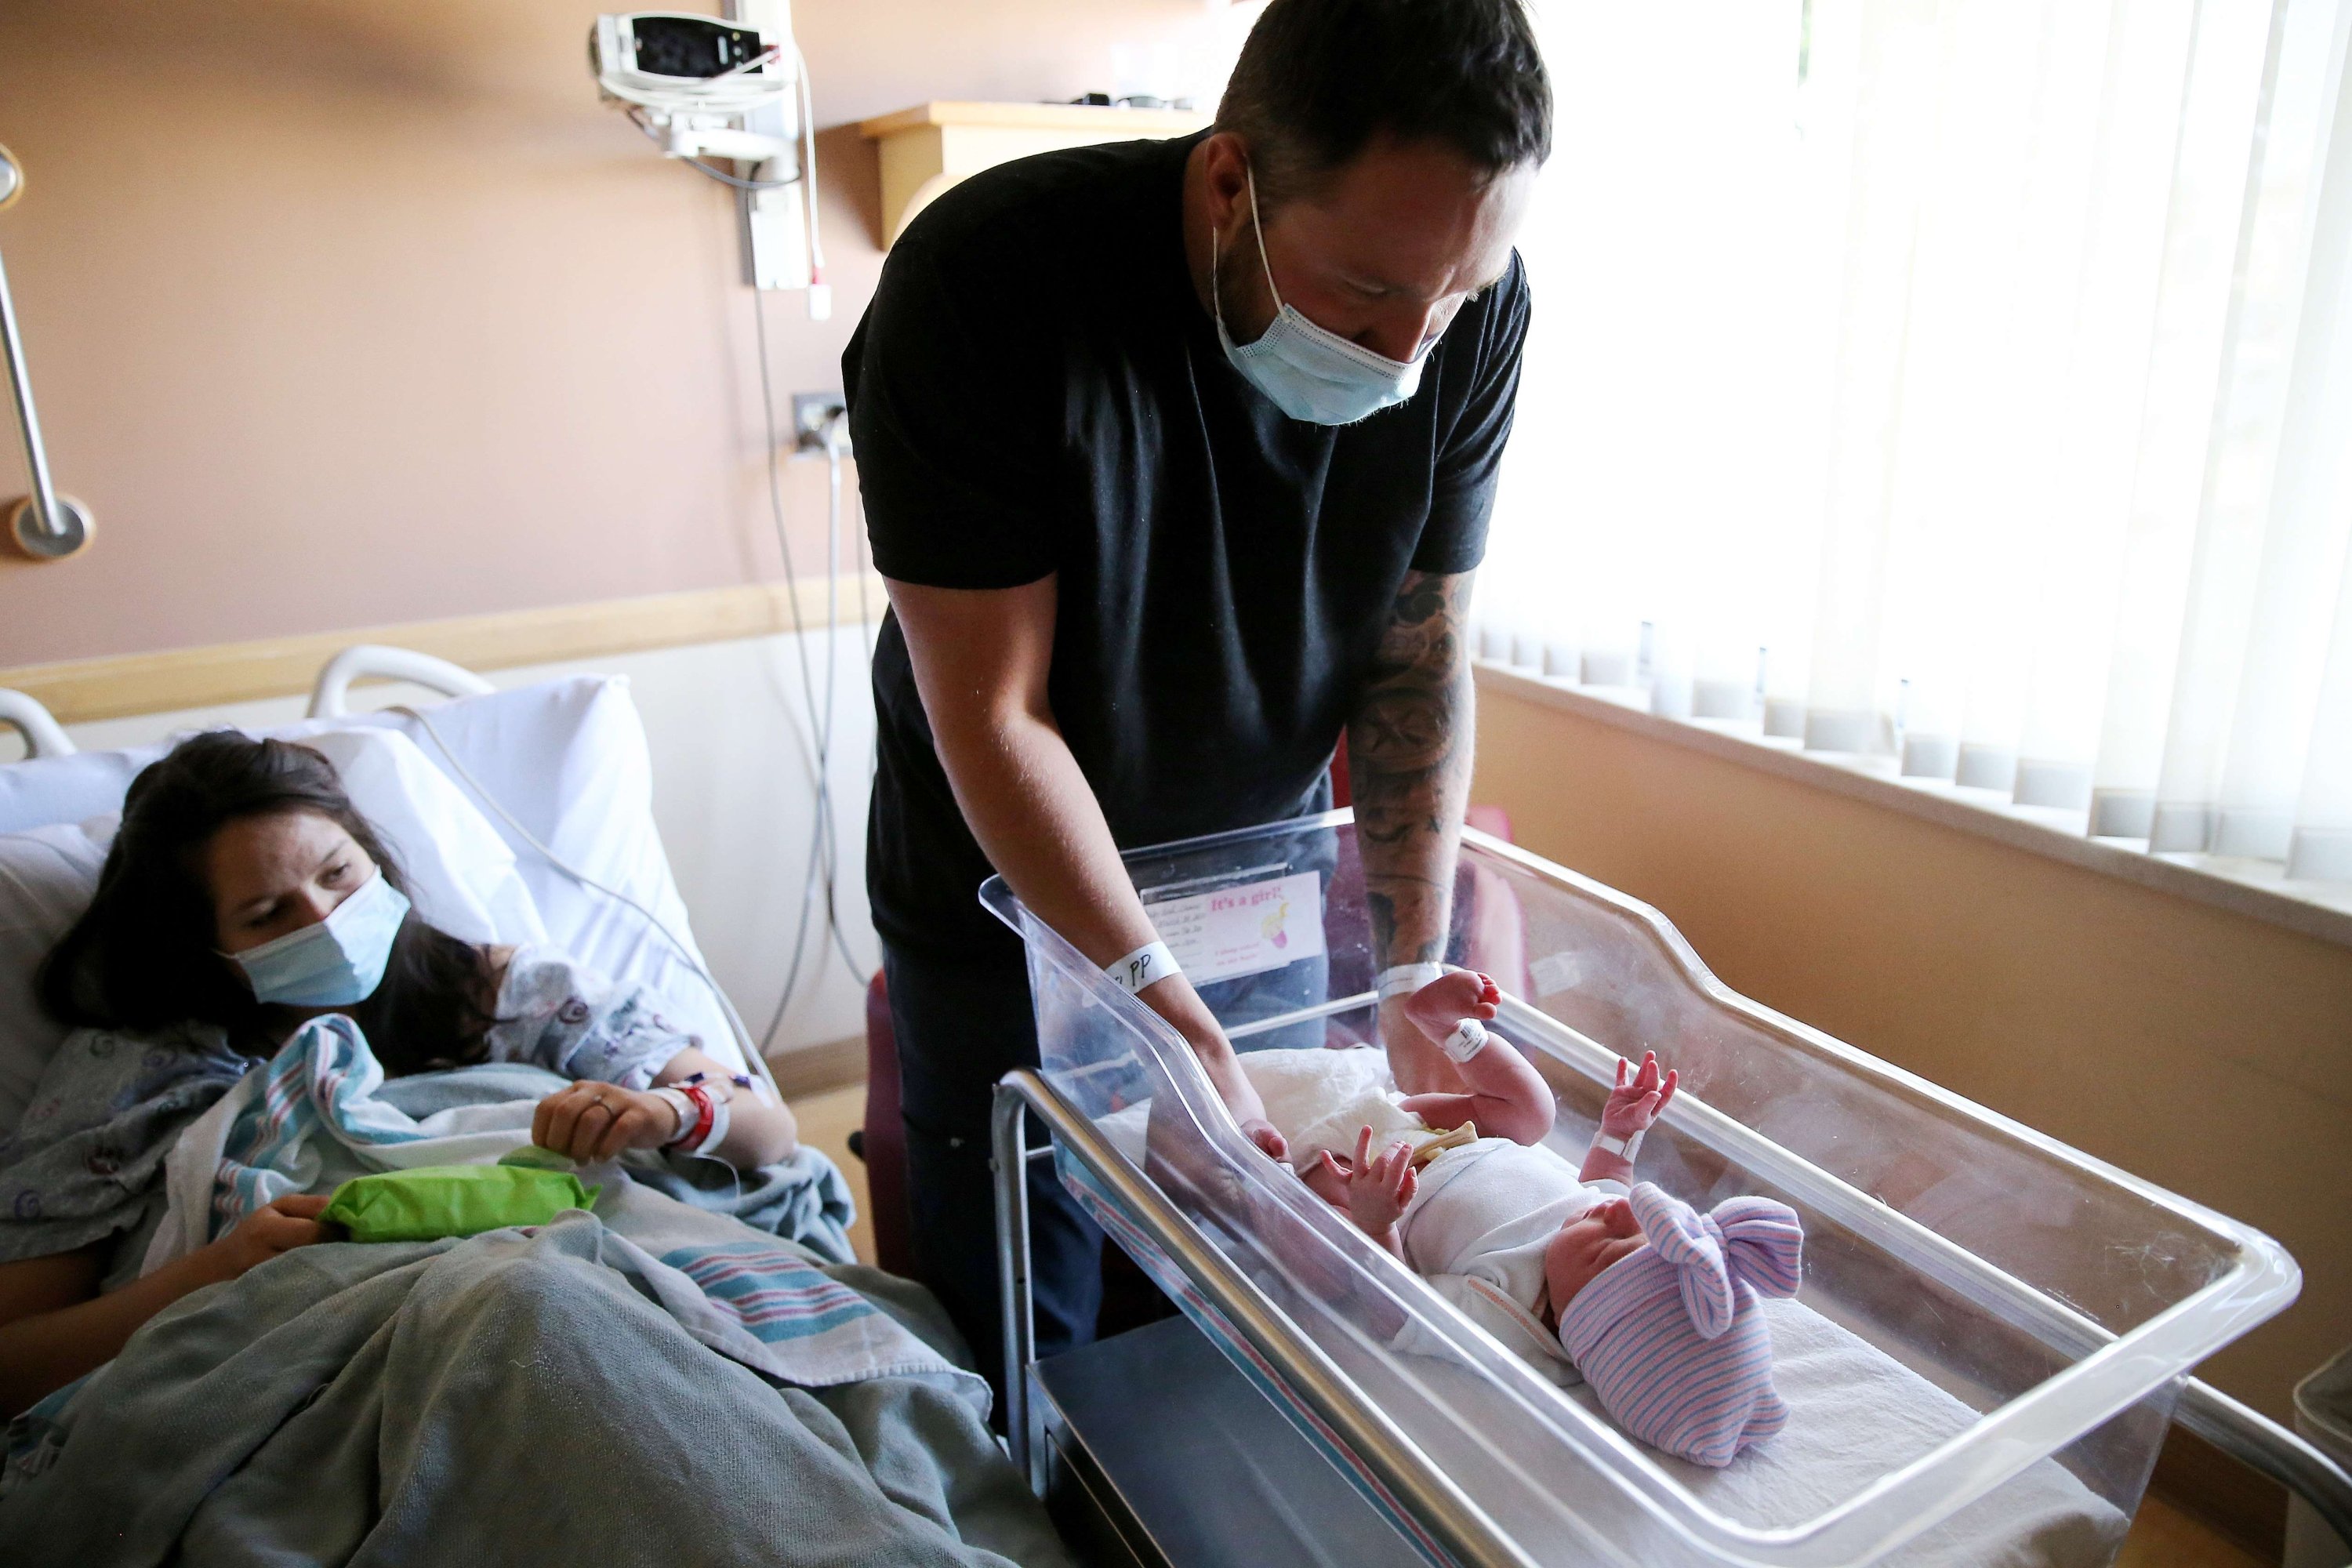 Matthew Karnes bersiap untuk mengganti popok putrinya yang baru lahir, Evelina Karnes, sementara istrinya Brianna Lamas mengamati unit pasca melahirkan di Providence Saint Mary's Medical Center di Apple Valley, California, AS, 30 Maret 2021 (Getty Images / AFP)